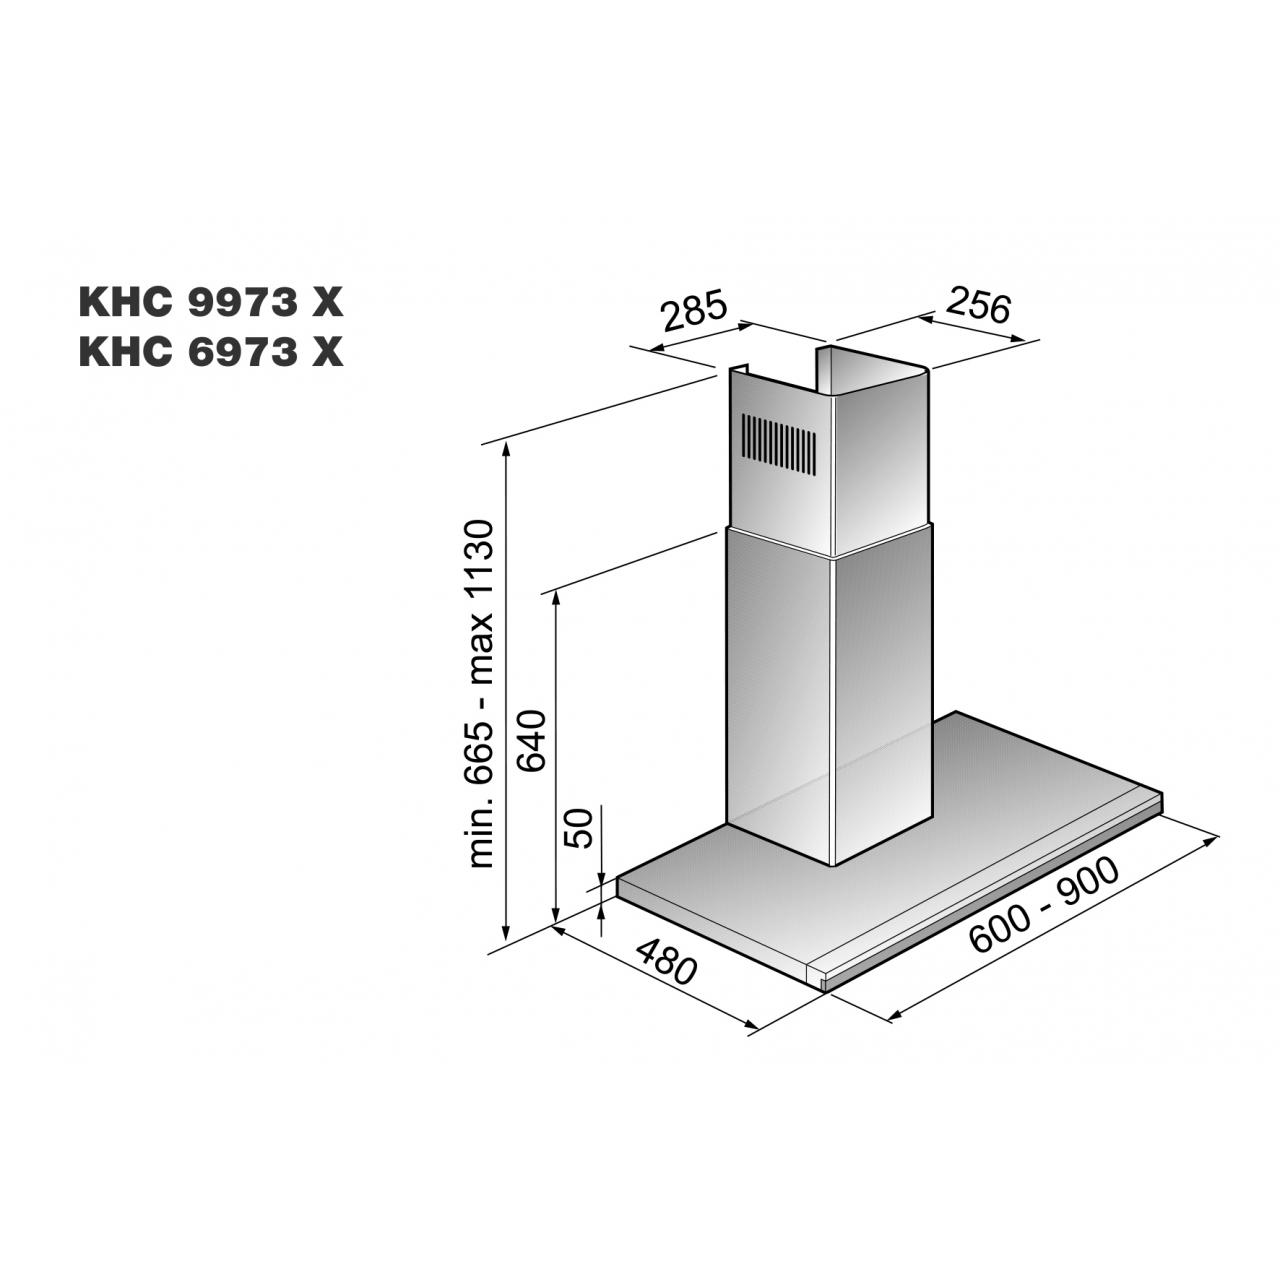 Korting KHC 6973 X.2